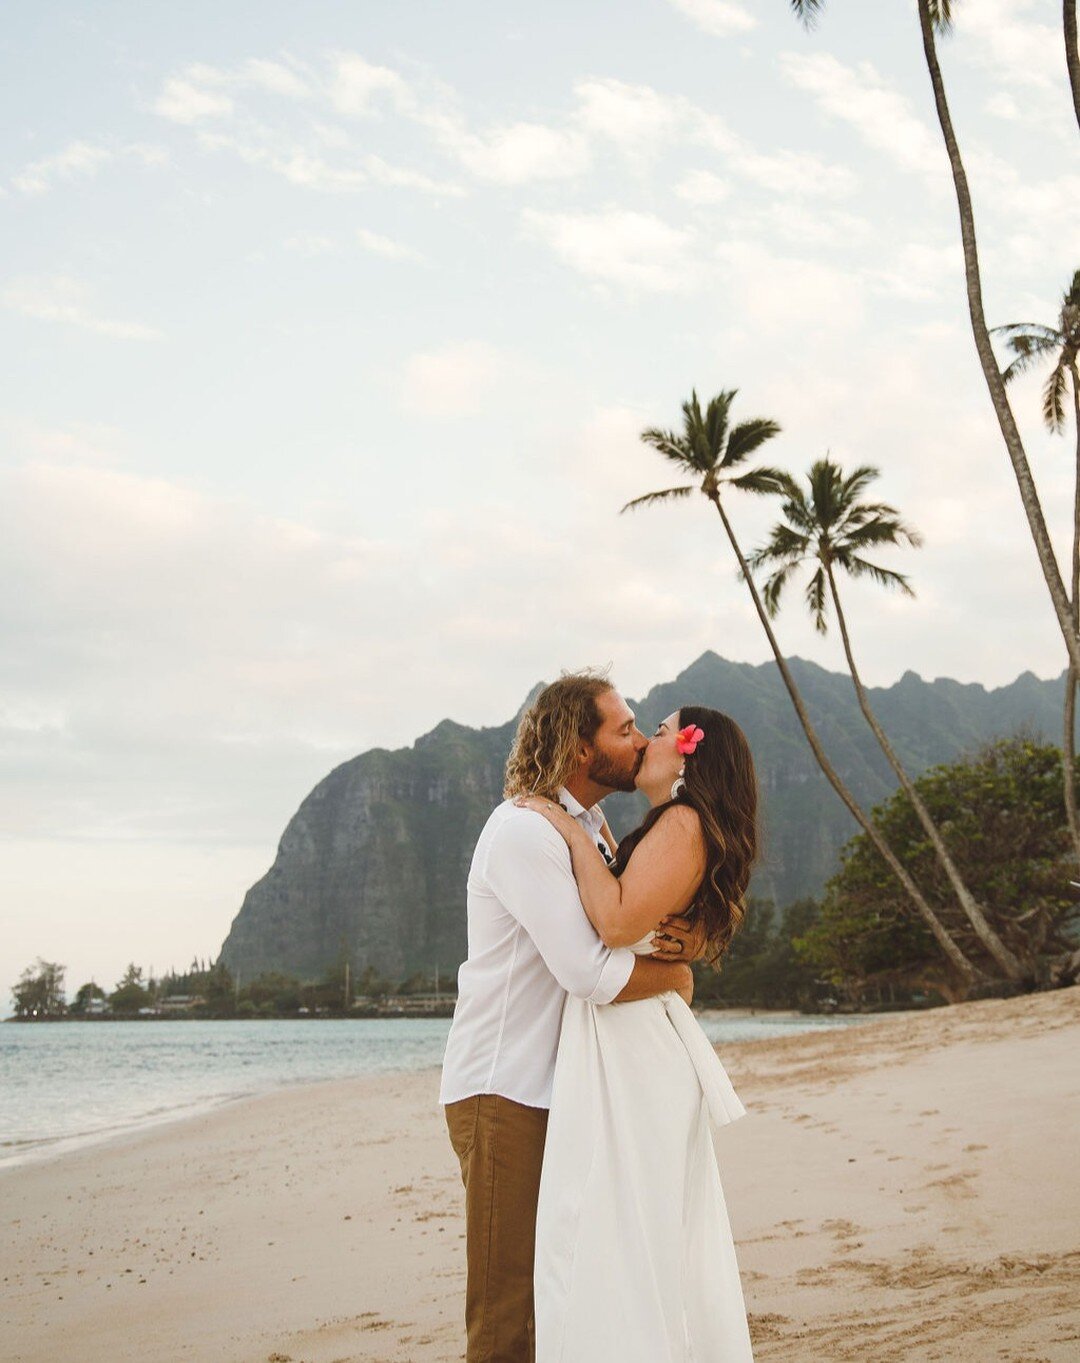 First kiss under a Hawaiian sky standing on dreamy white sand 🏝

#oahuofficiant #hawaiiofficiant #oahuelopement #hawaiielopement #hawaiiwedding #oahuwedding #oahuweddingminister #hawaiiweddingminister #oahuelopementpackage #hawaiielopementpackage
#h